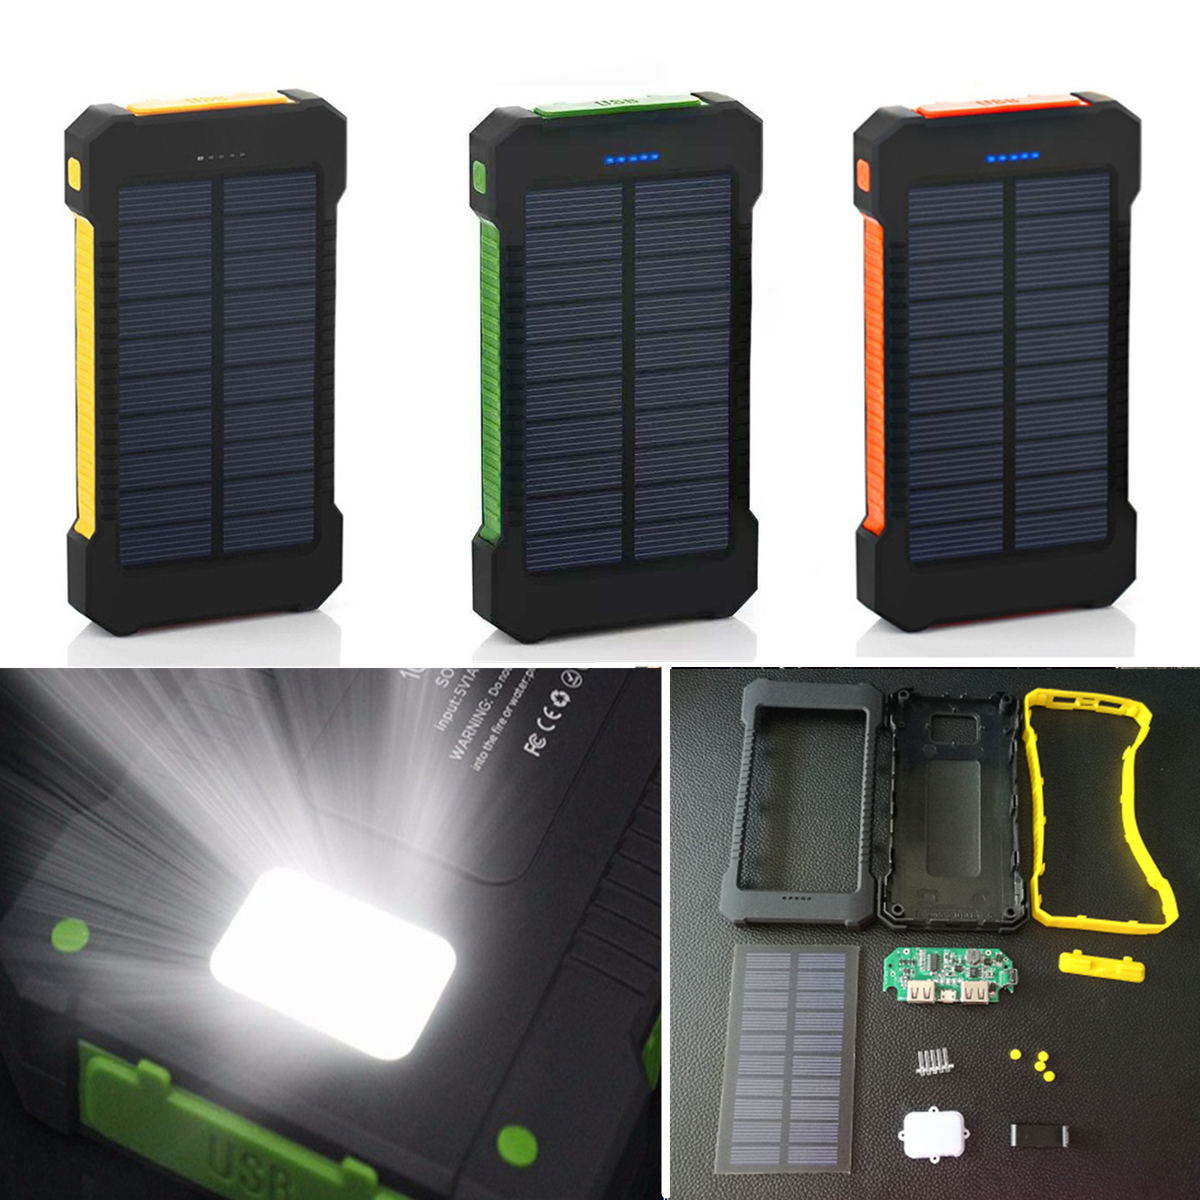 

Bakeey F5 10000mAh Solar Panel LED Dual USB Ports DIY Power Bank Case Battery Charger Kits Box